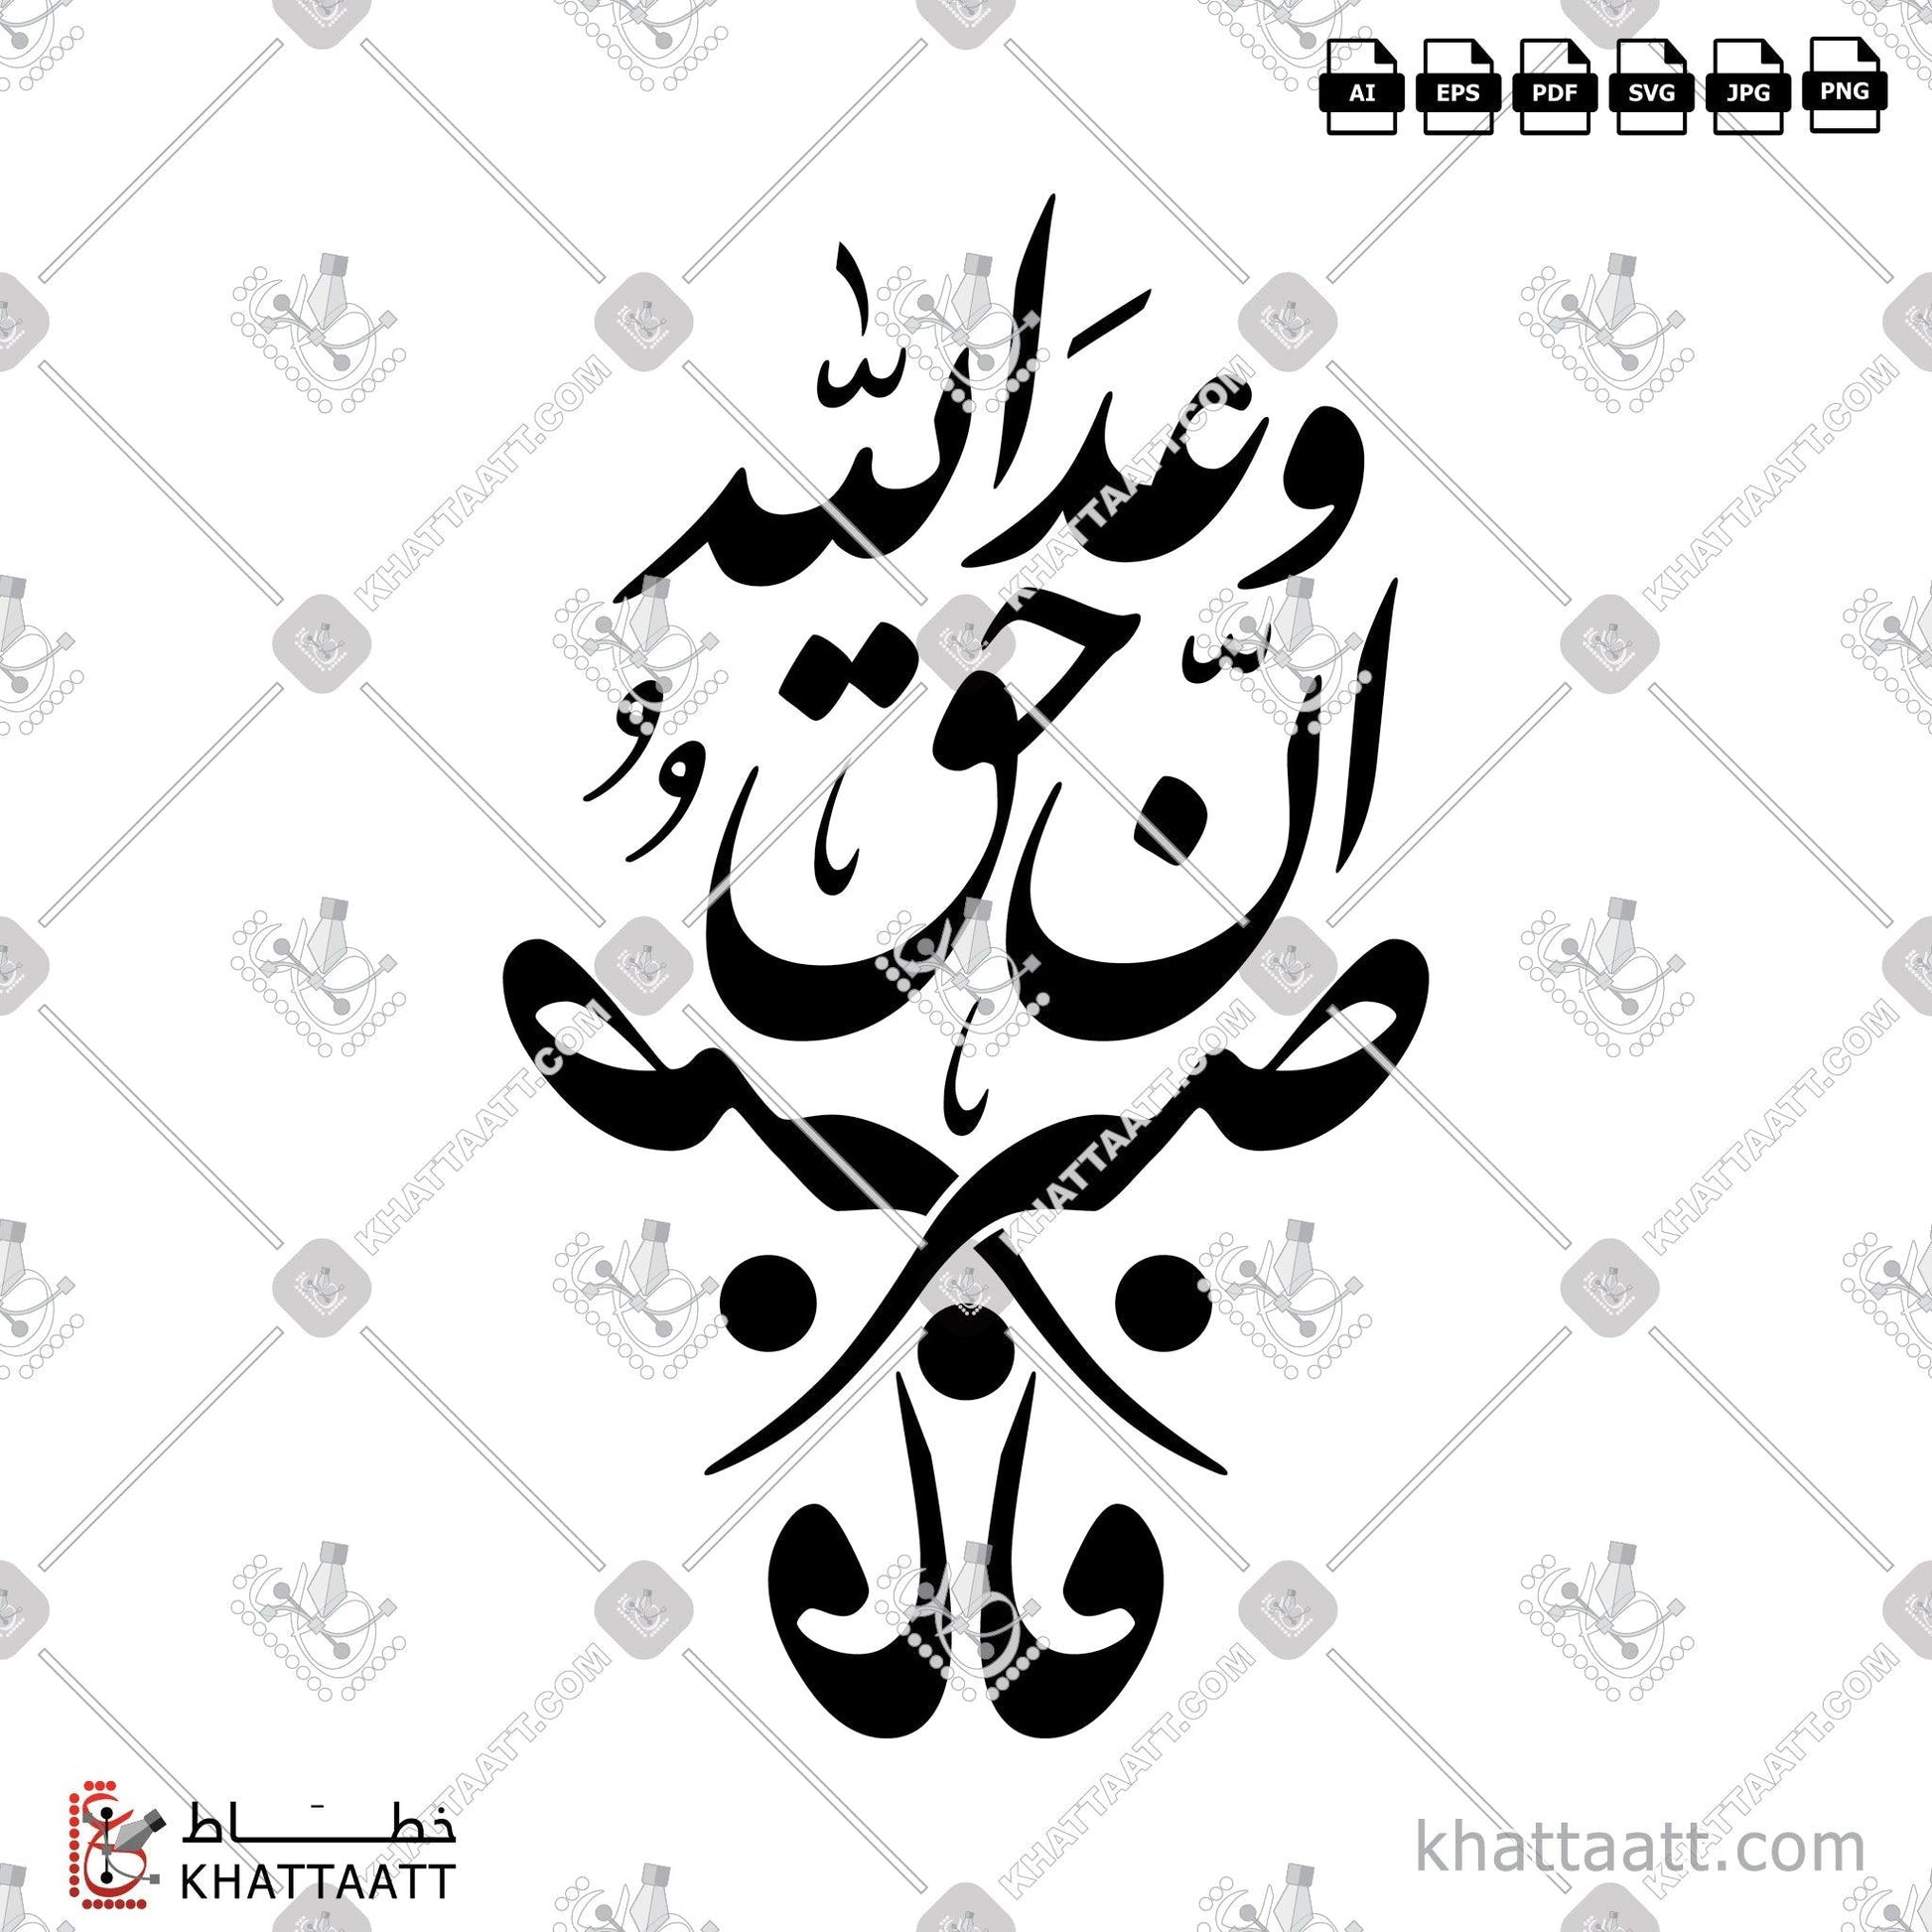 Download Arabic Calligraphy of فاصبر إن وعد الله حق in Farsi - الخط الفارسي in vector and .png